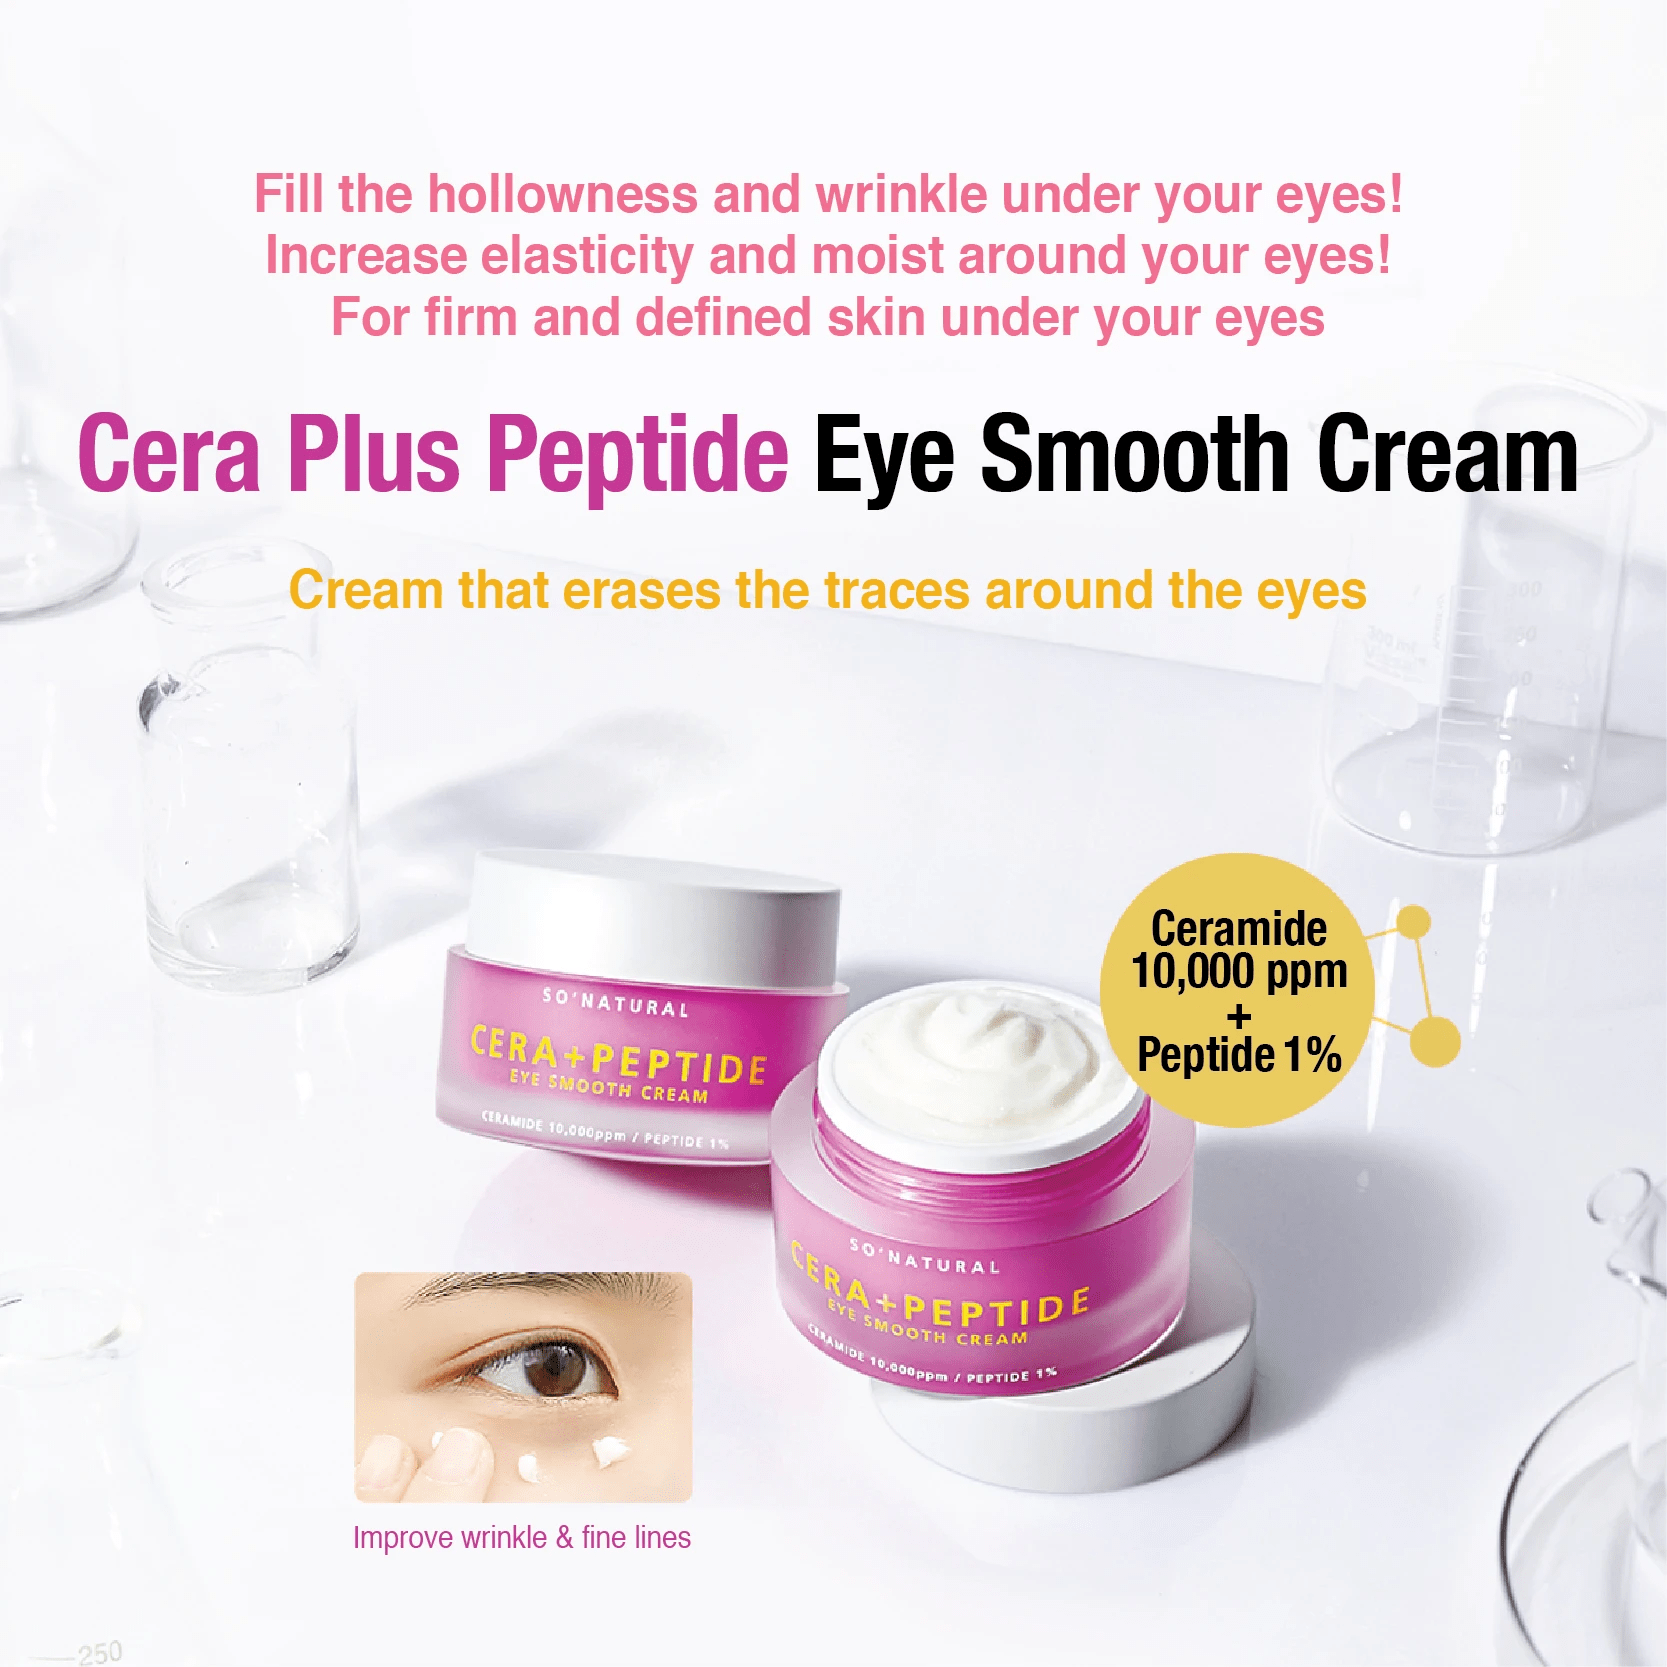 so natural Cera Plus Peptide Eye Smooth Cream - eCosmeticWorld